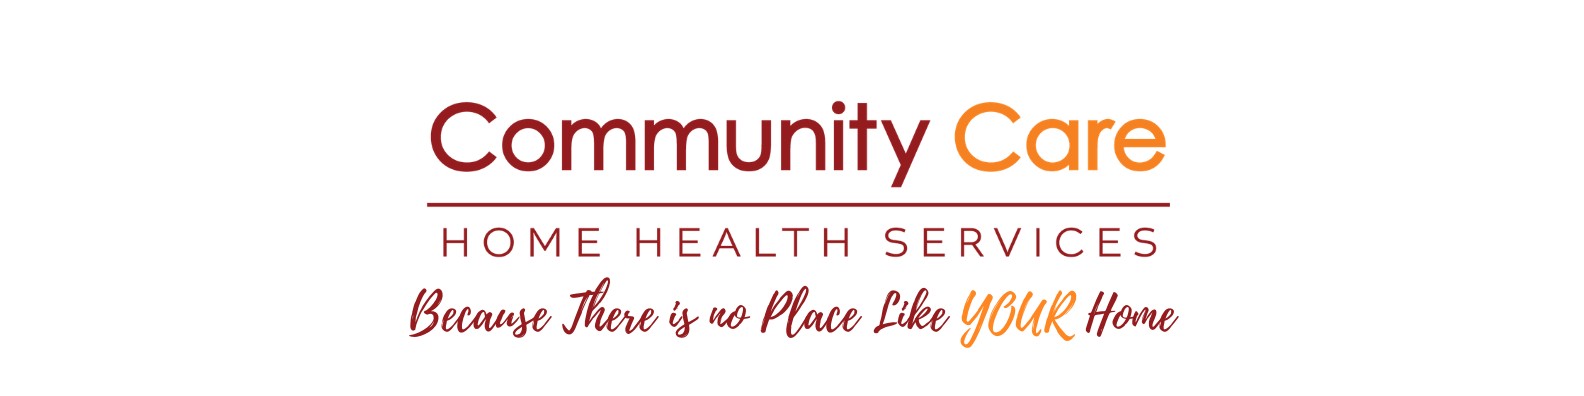 Community Care Home Health Services Linkedin